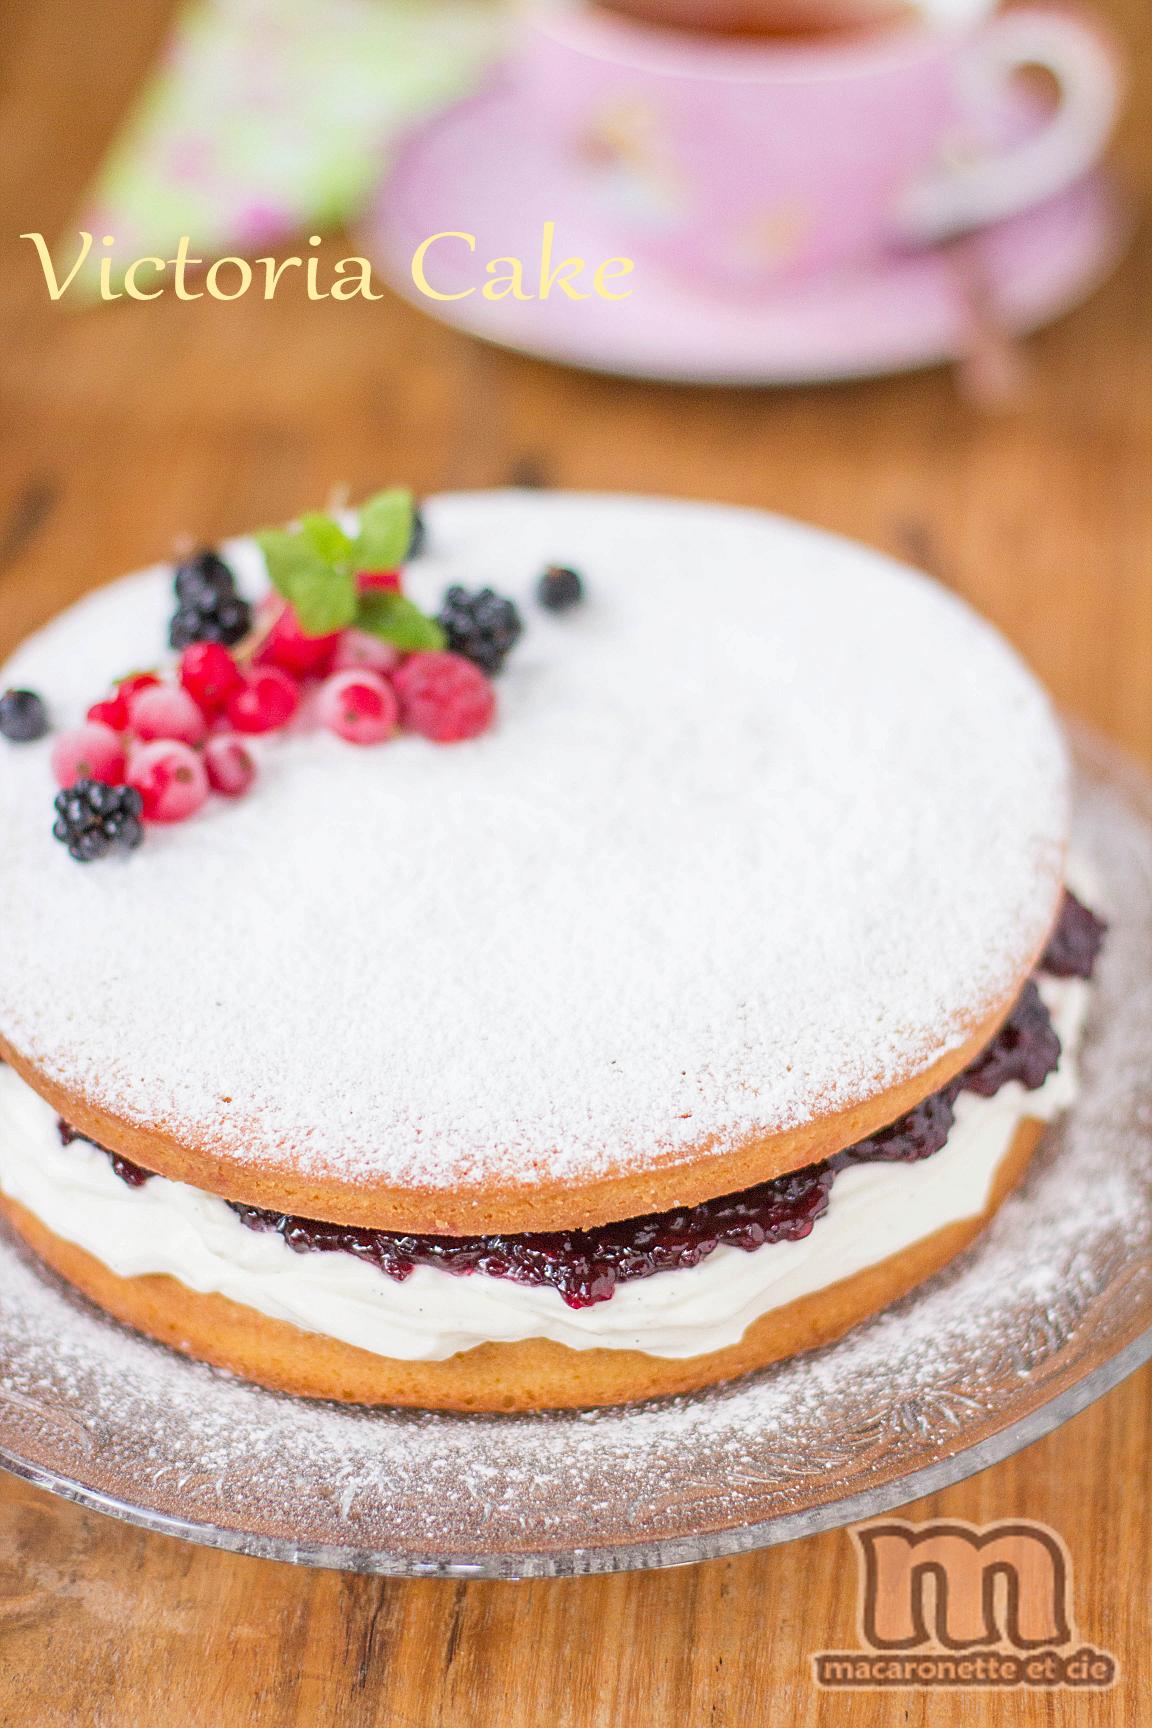 Victoria cake - Macaronette et cie